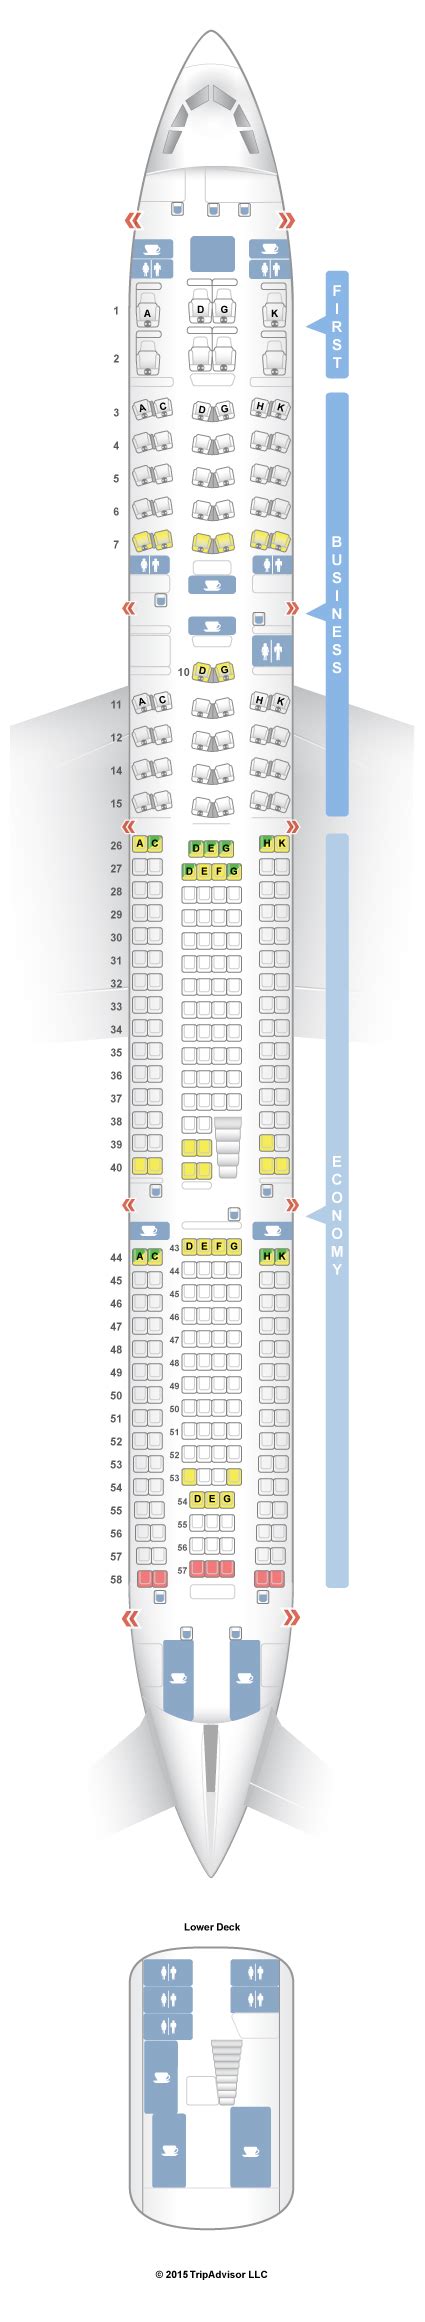 Seatguru Seat Map Lufthansa Airbus A340 600 346 V2 Seatguru Airbus